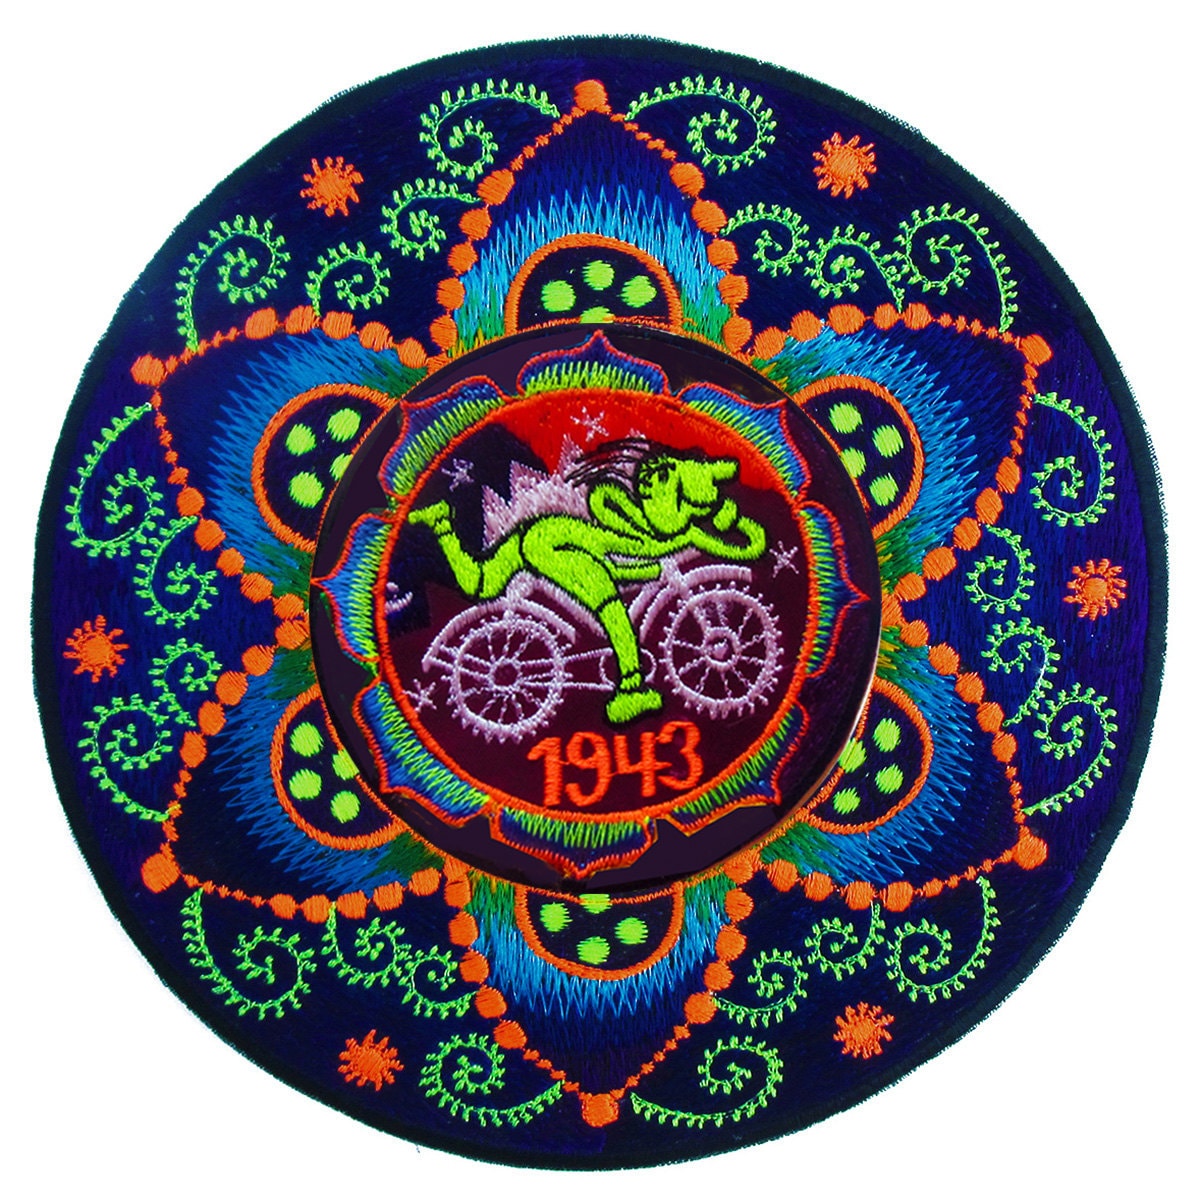 Hofmann LSD Bicycle Day fractal flower of life Patch 1943 Psychedelic Fractal Acid Trip Goa Hippie Visionary Medicine Divine Healing